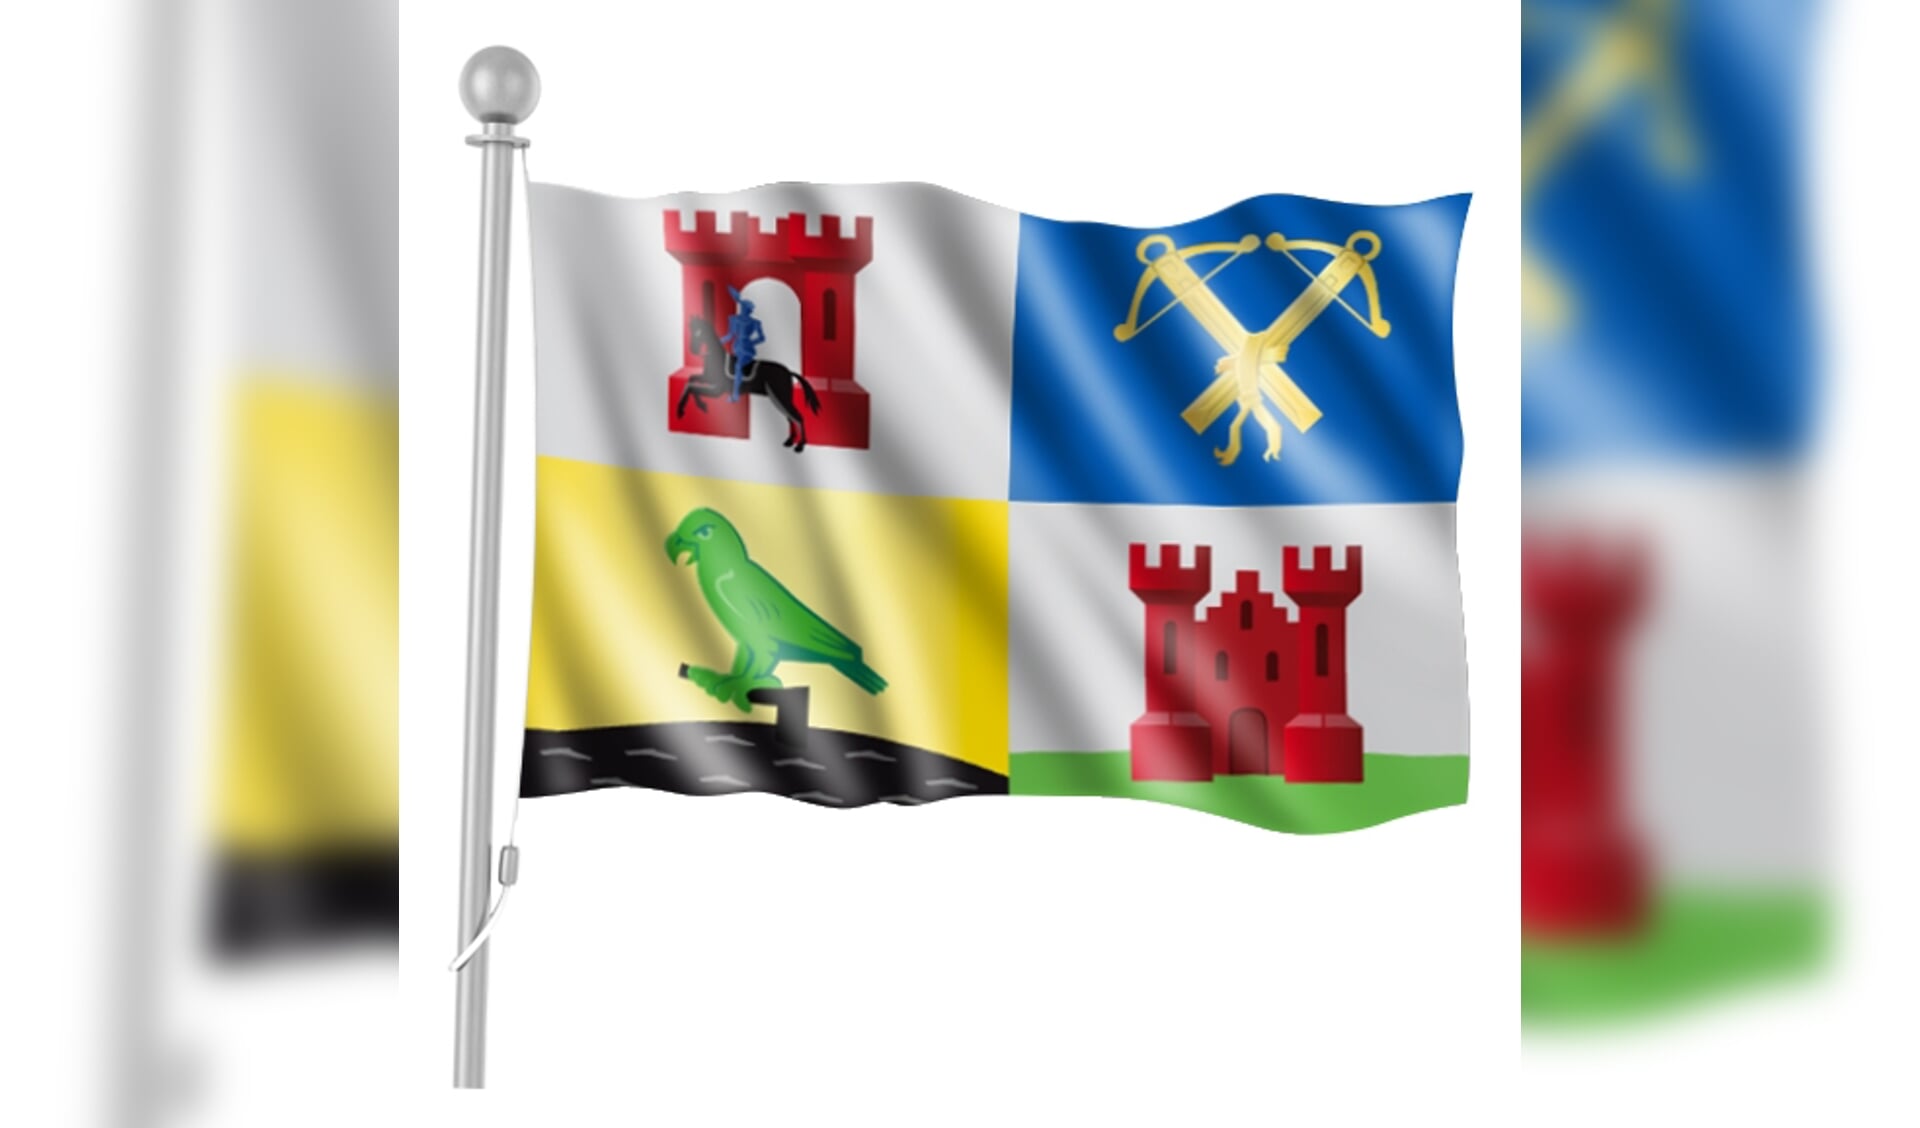 De vlag van Ouddorp.